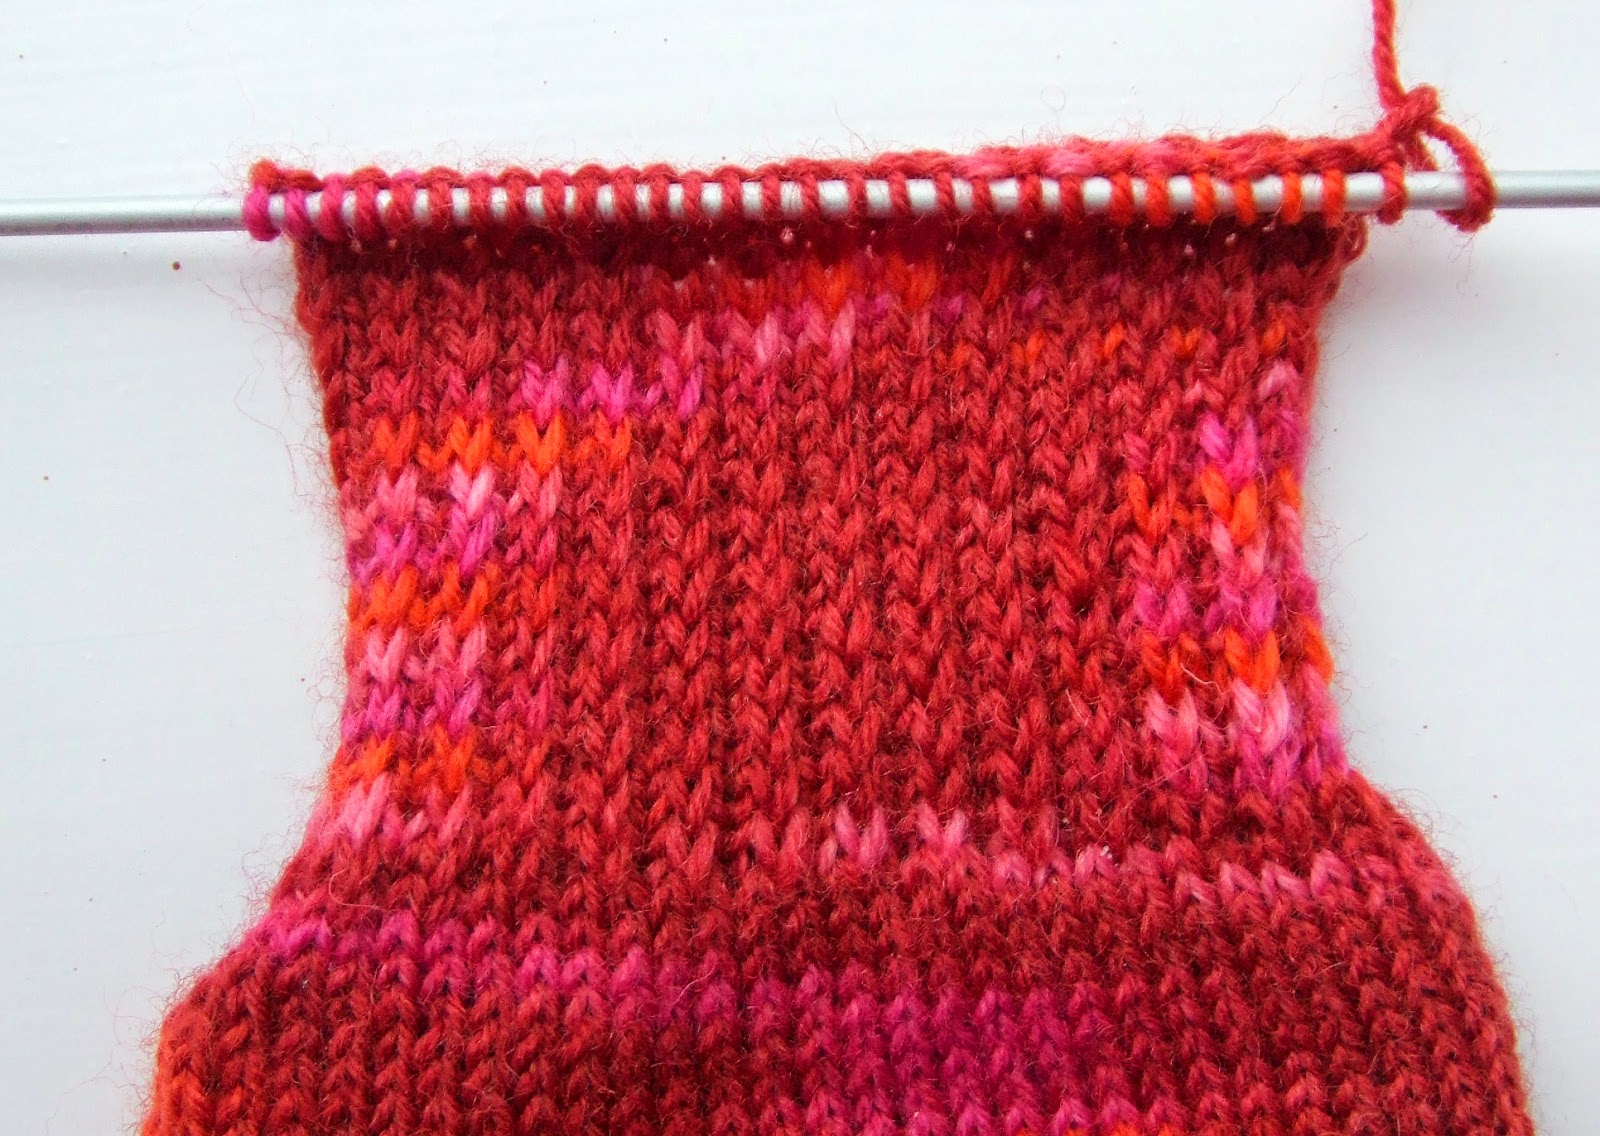 Winwick Mum: Basic 4ply sock pattern and tutorial - easy ...